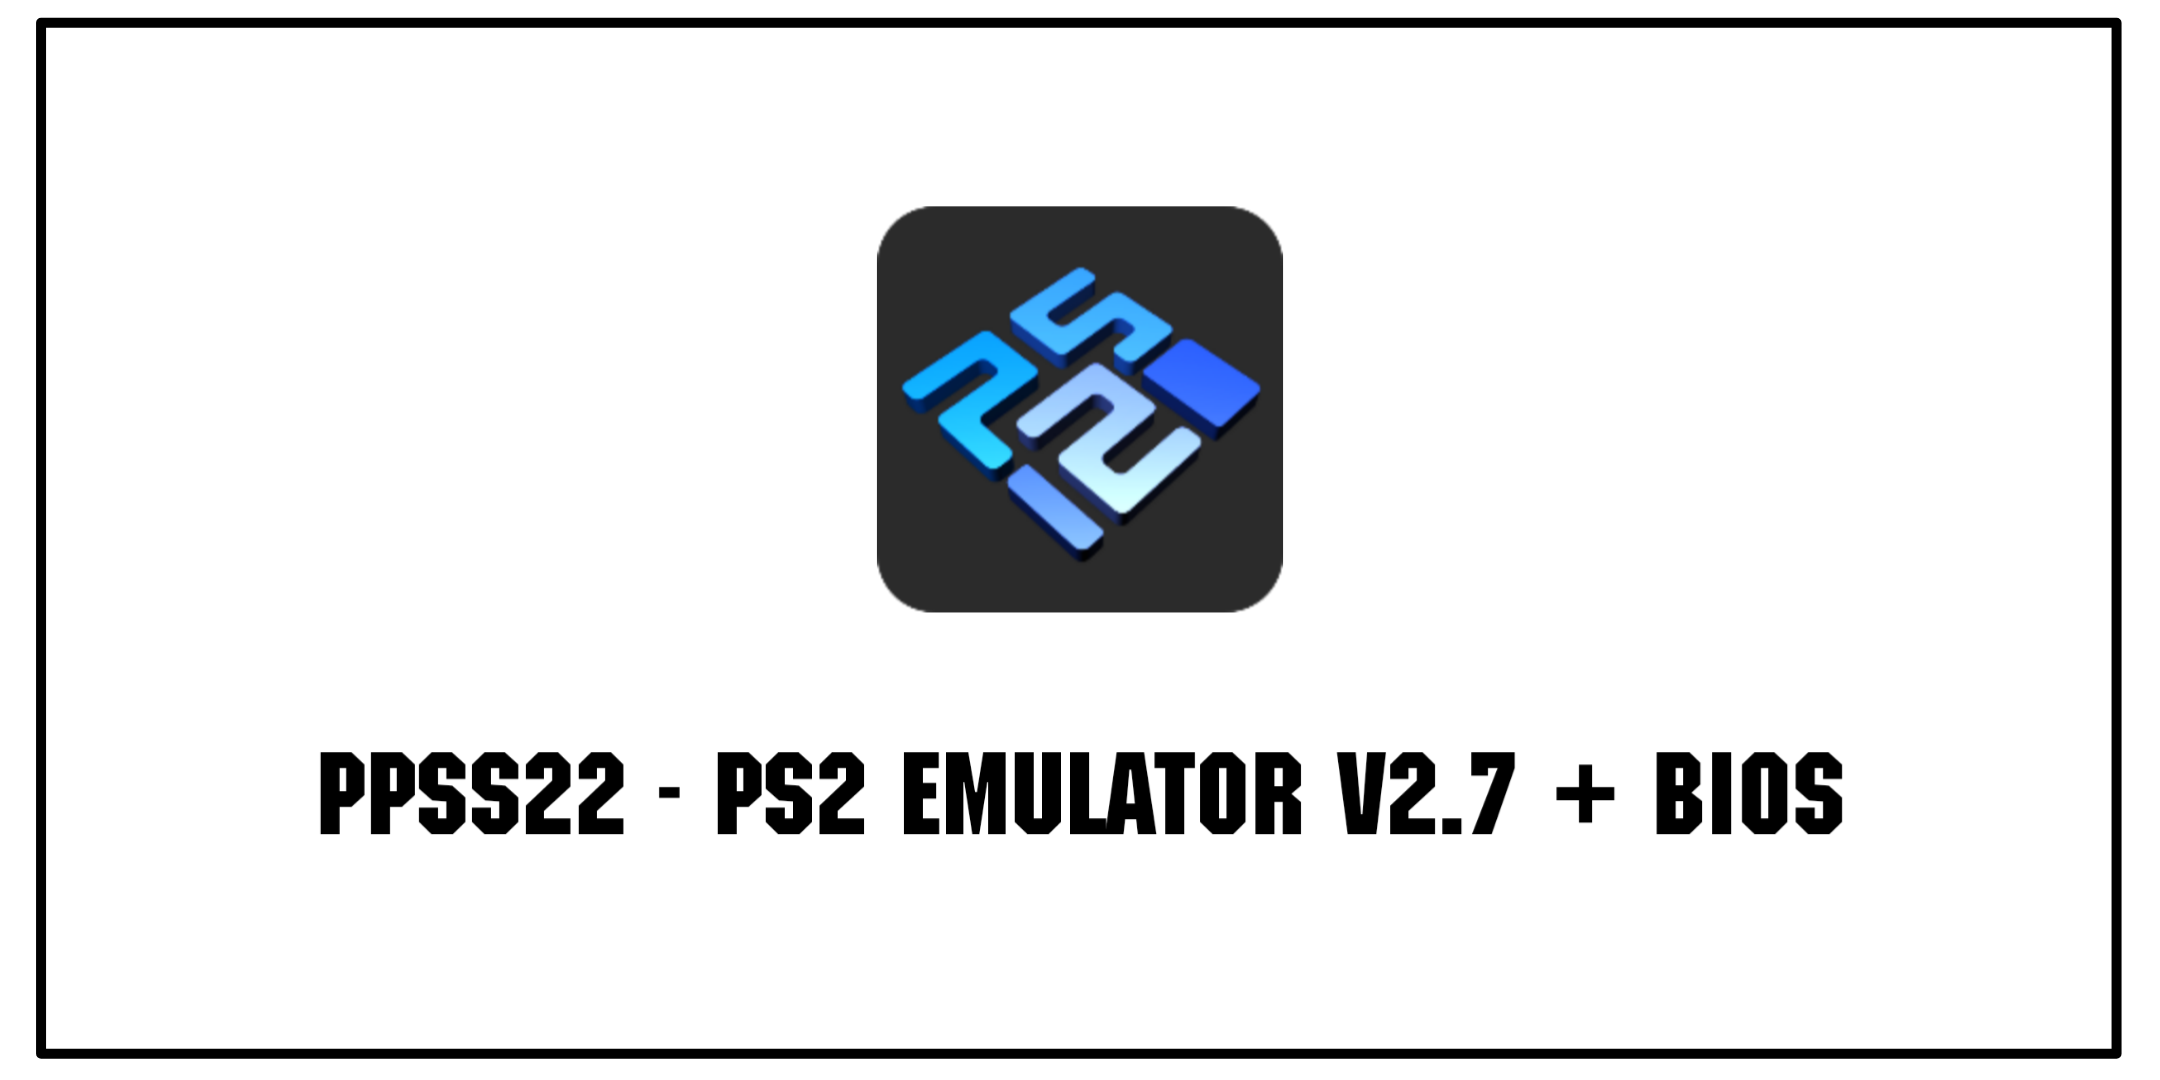 pcsx2 emulator apk